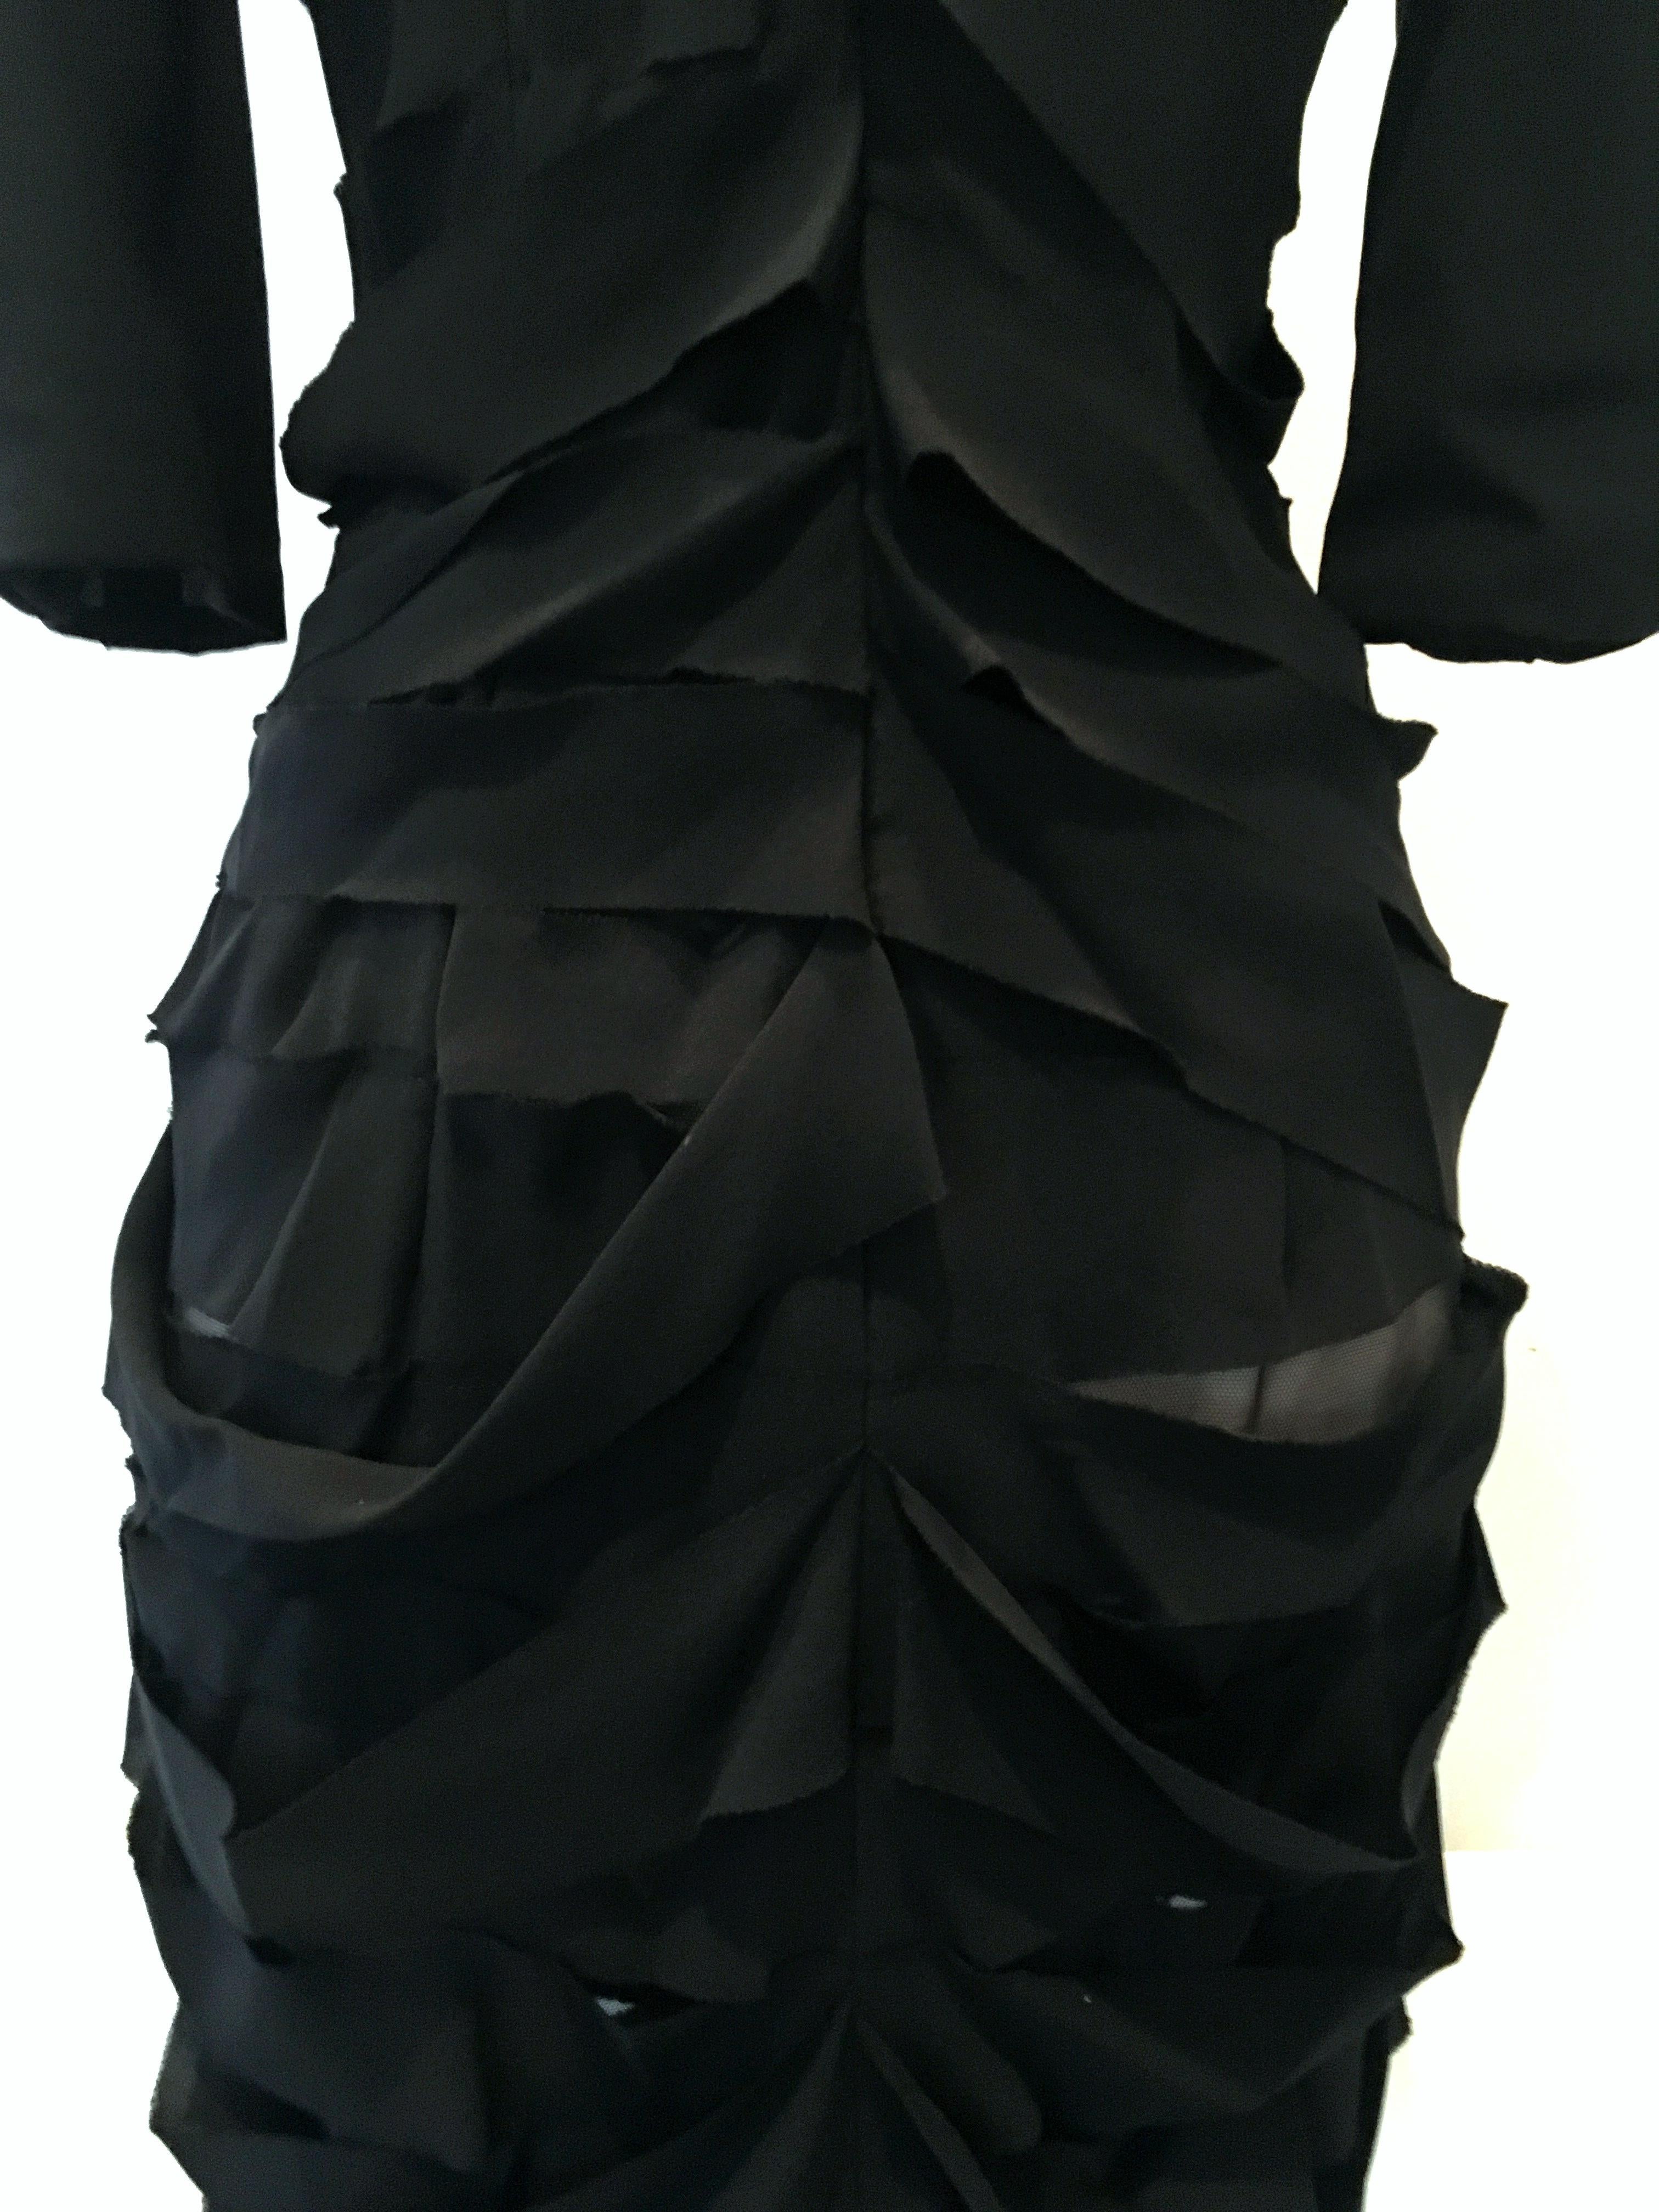 21st Century & New Black Silk Dress By, Nina Ricci Paris For Sale 2